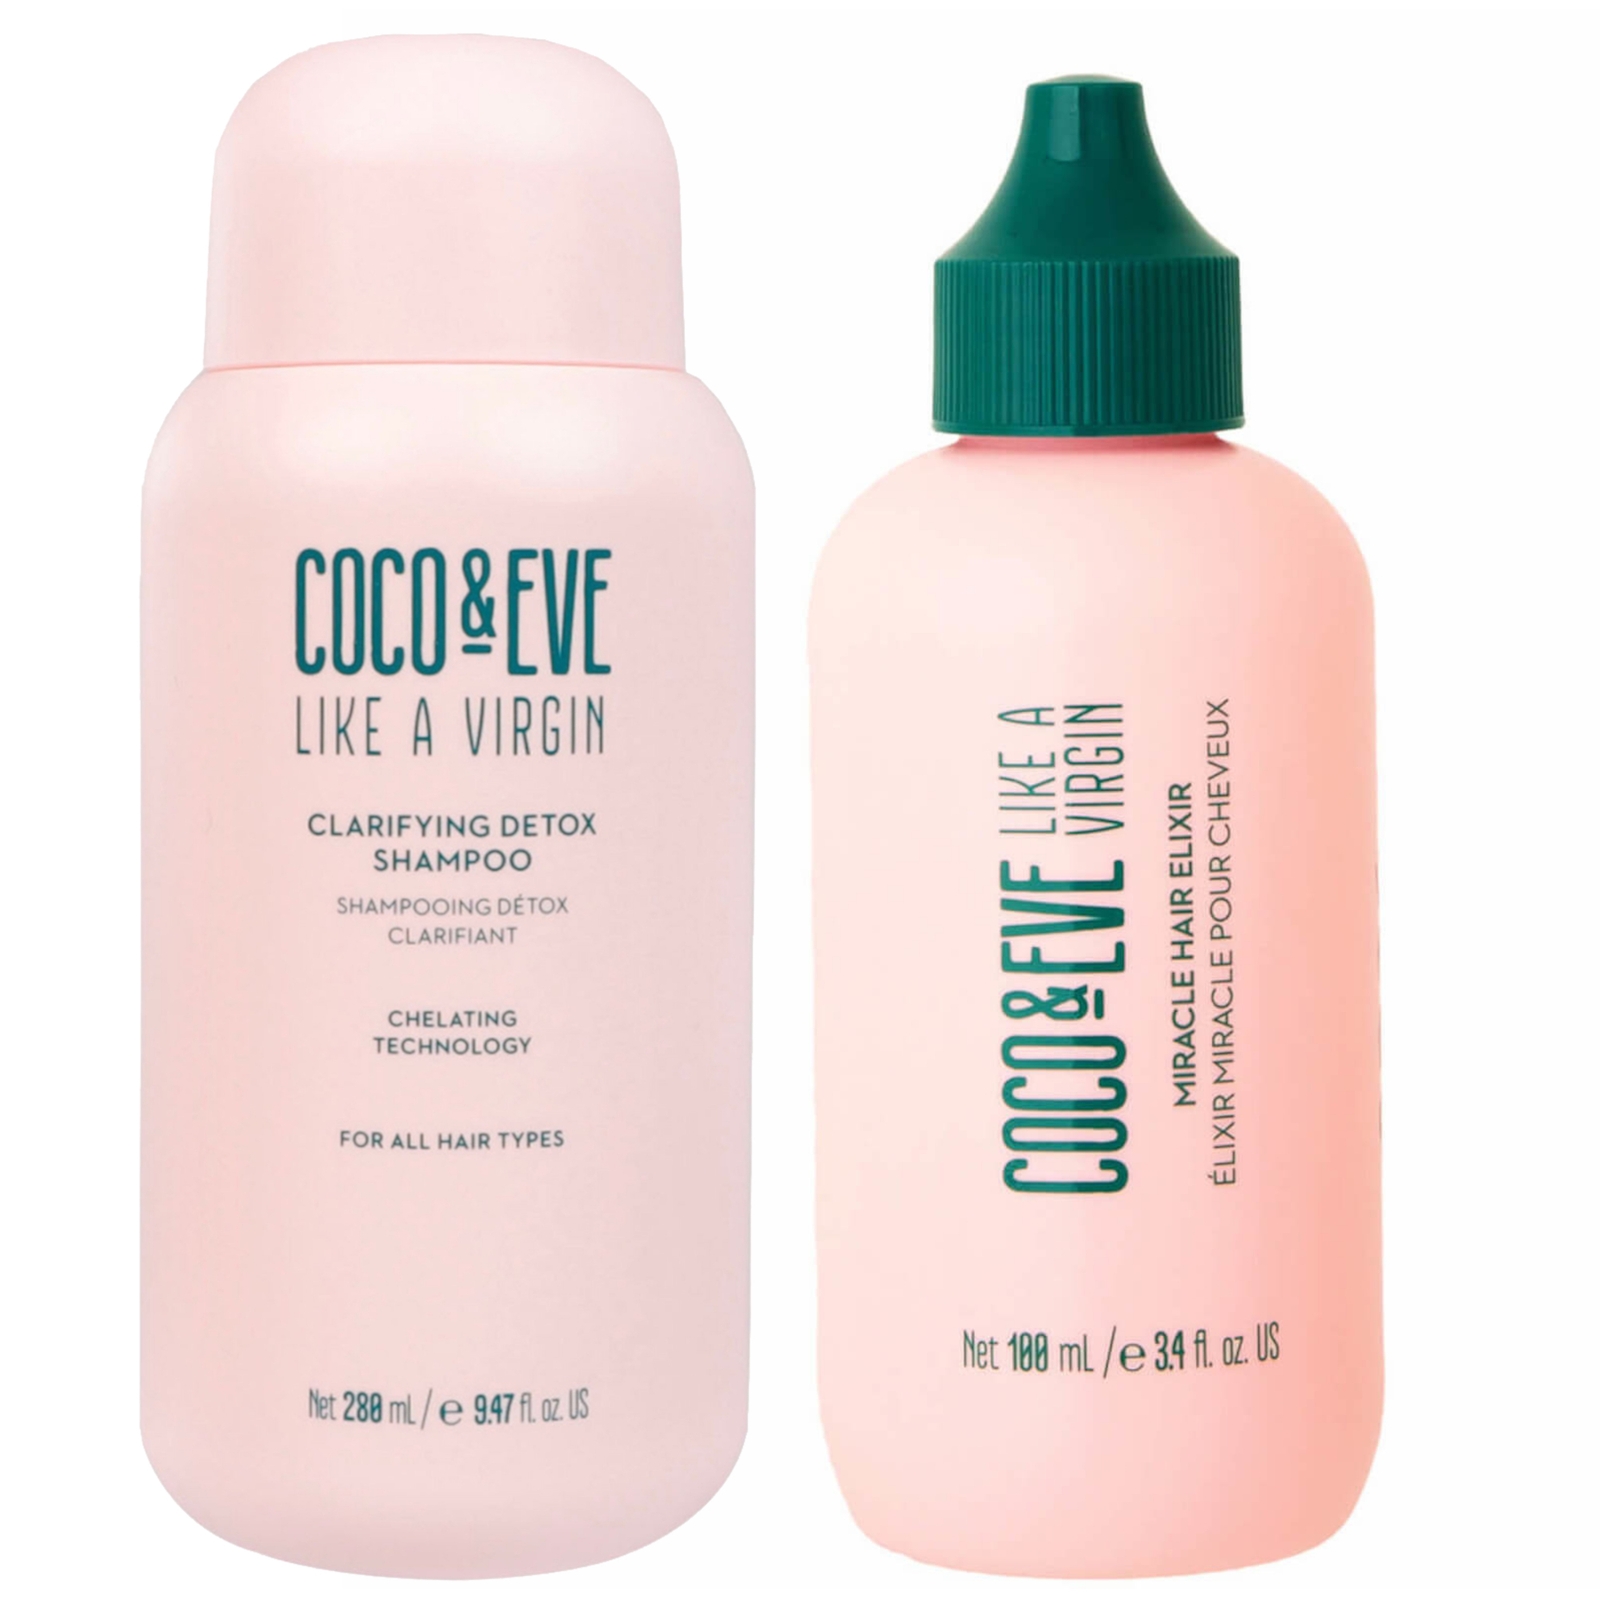 Coco & Eve Hair Detox Bundle In White